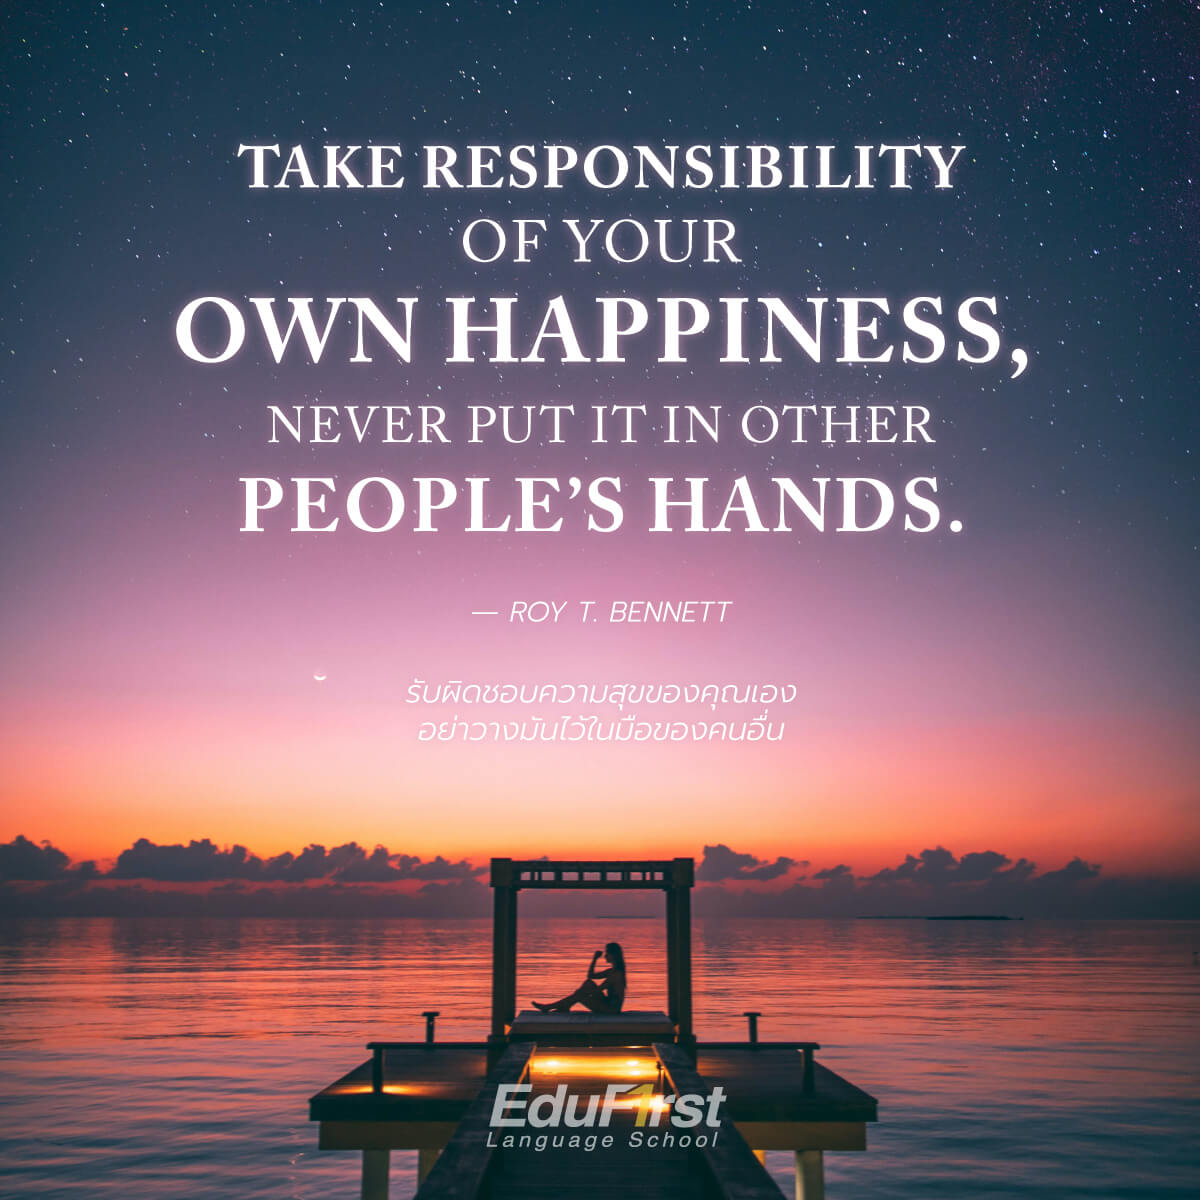 Take responsibility of your own happiness, never put it in other people’s hands. – Roy T. Bennett<br />
รับผิดชอบความสุขของคุณเอง อย่าวางมันไว้ในมือของคนอื่น<br />
